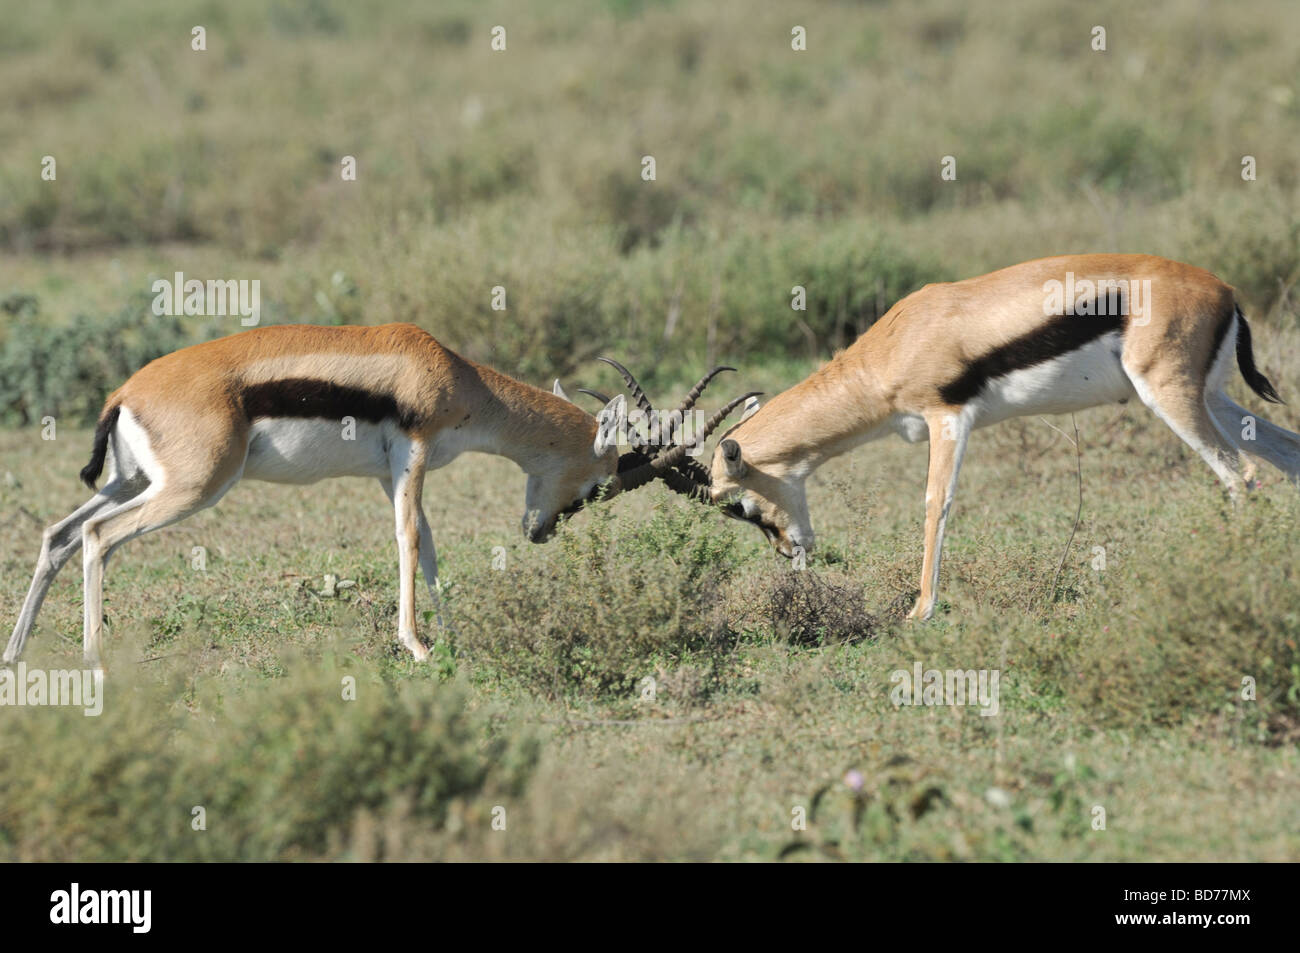 Stock photo of two thomson's gazelle bucks sparring, Ndutu, Tanzania, February 2009. Stock Photo